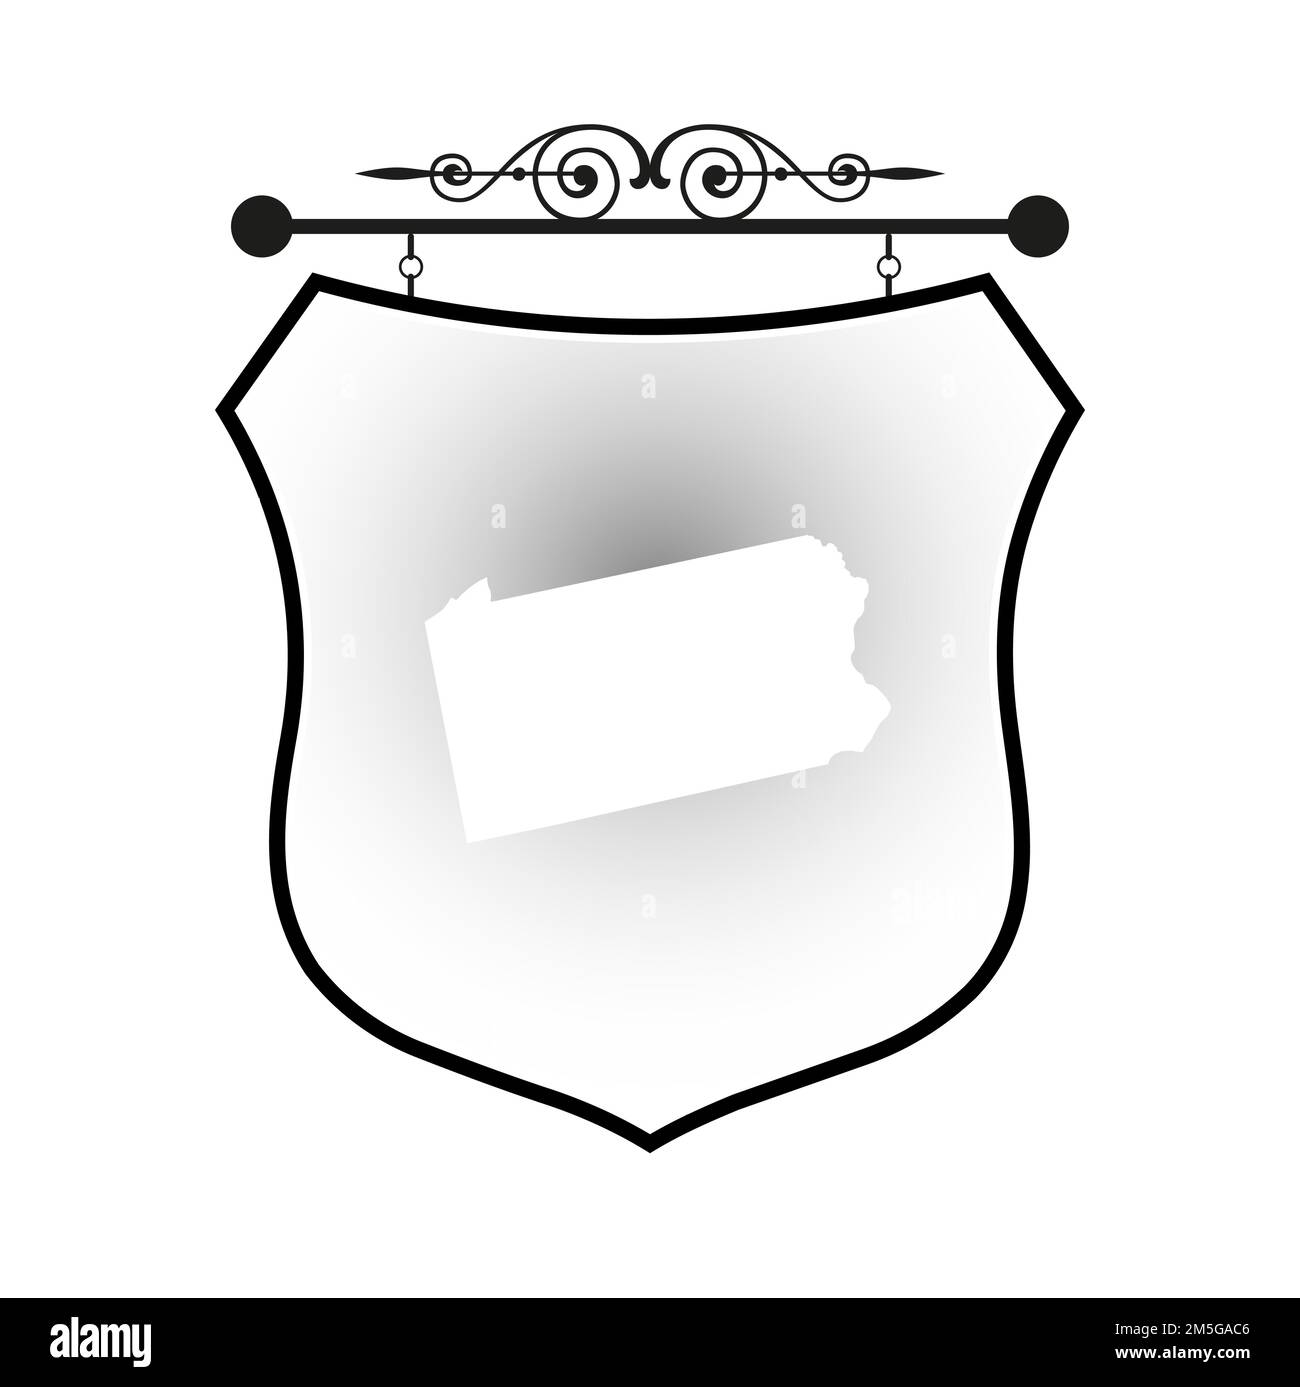 Pennsylvania map on heraldic sign Stock Vector